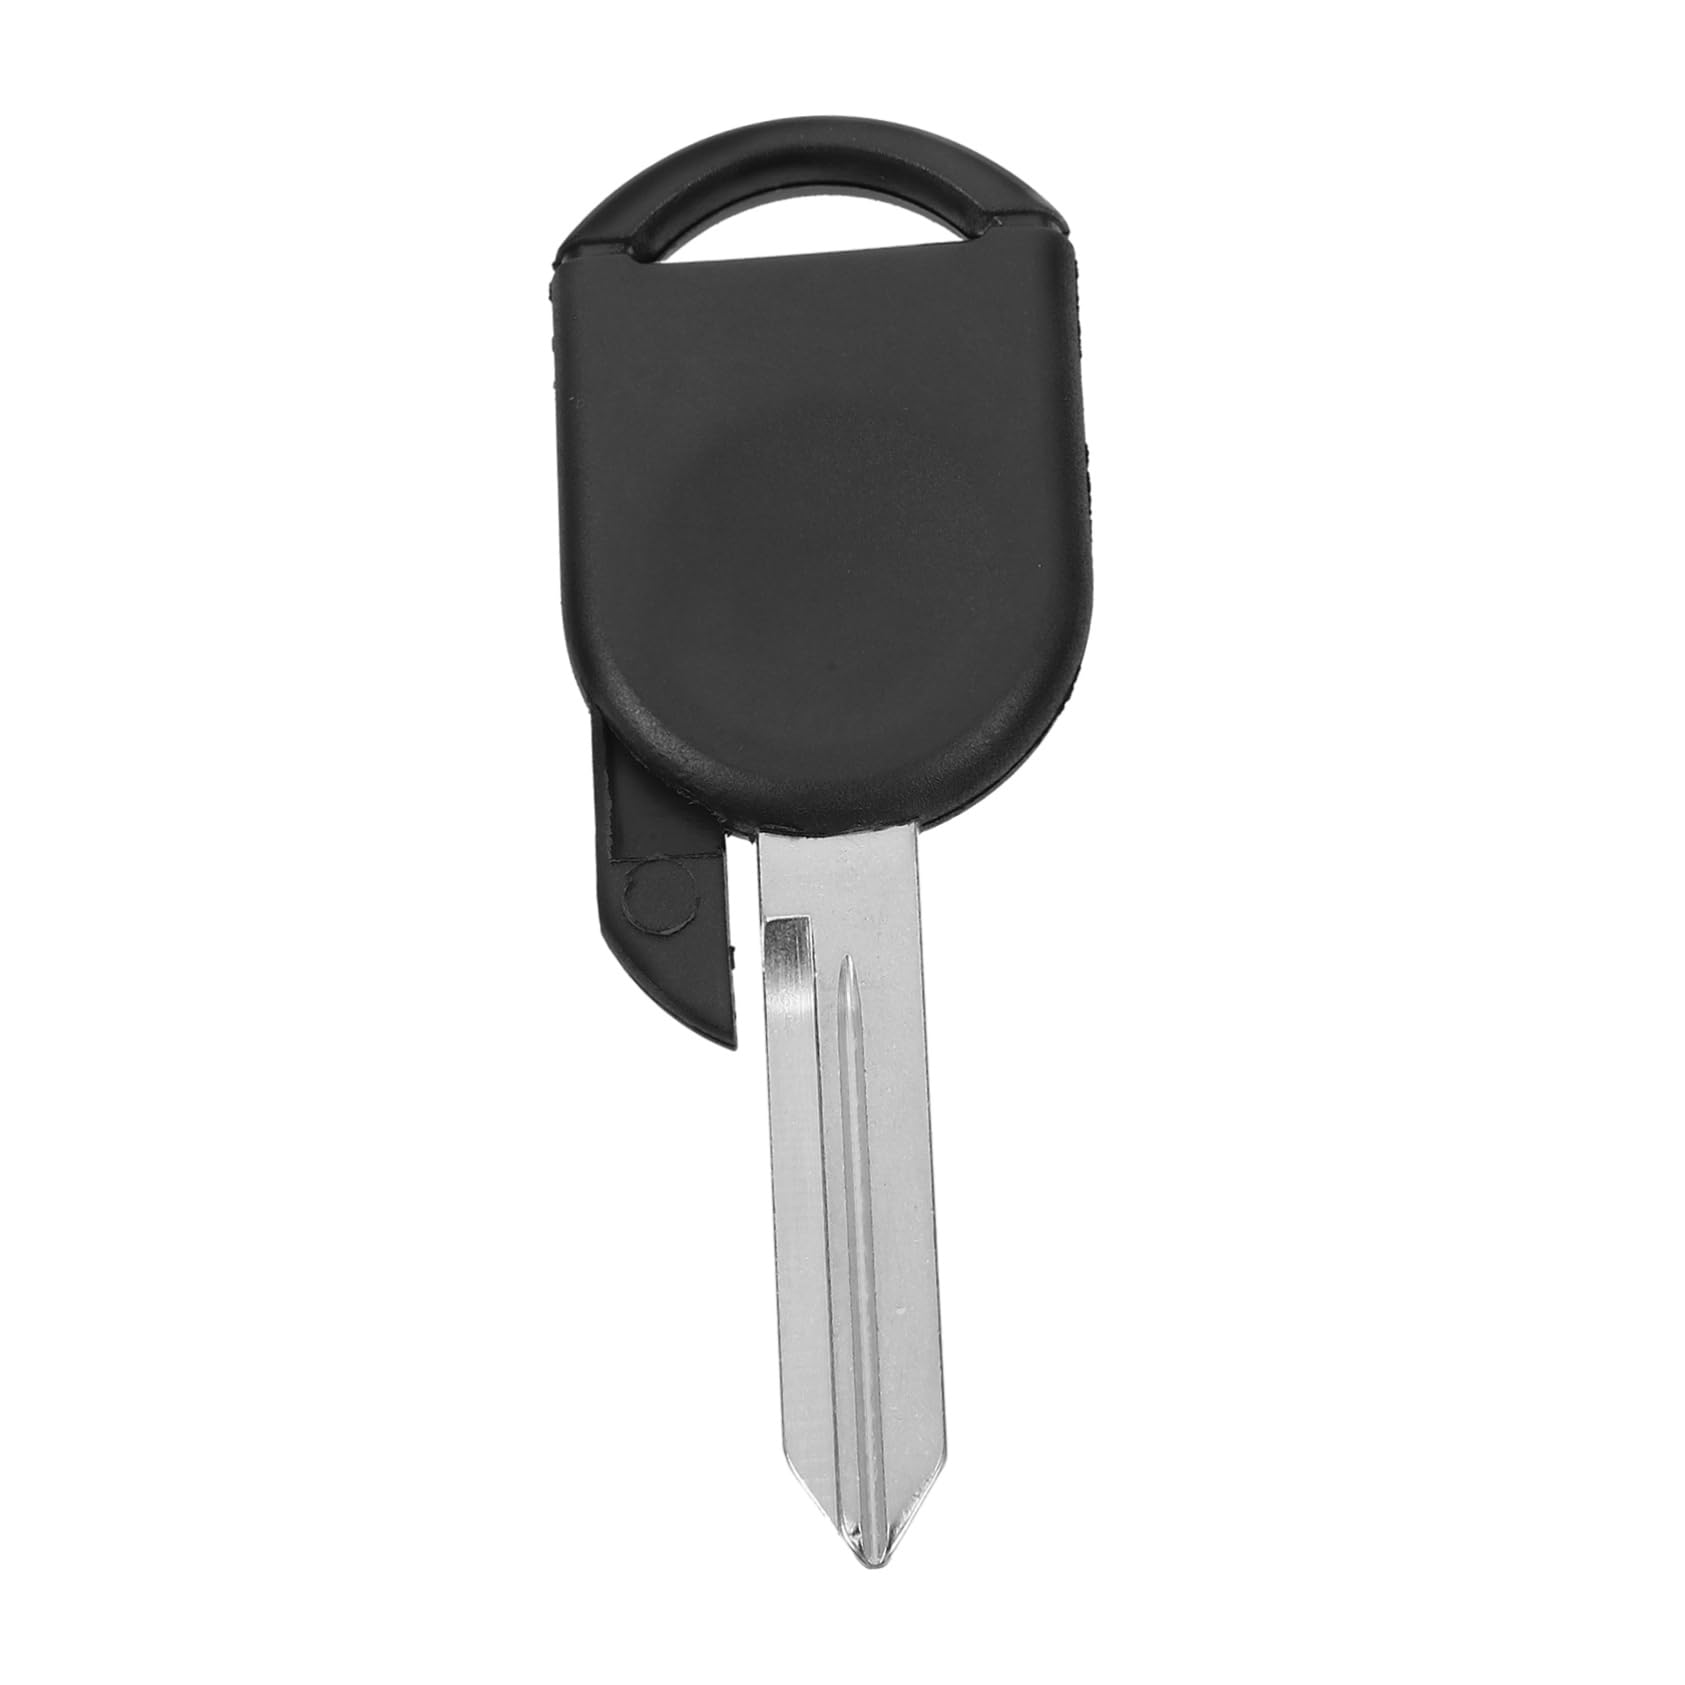 PartyKindom Schlüsselhülle Schlüsselgehäuse Schlüsselanhänger Autoschlüssel Shell Ersatz Autoschlüssel Auto schlüssel halter fob schlüssel Abdeckung Schlüsseletui für Autoschlüssel Kunststoff von PartyKindom